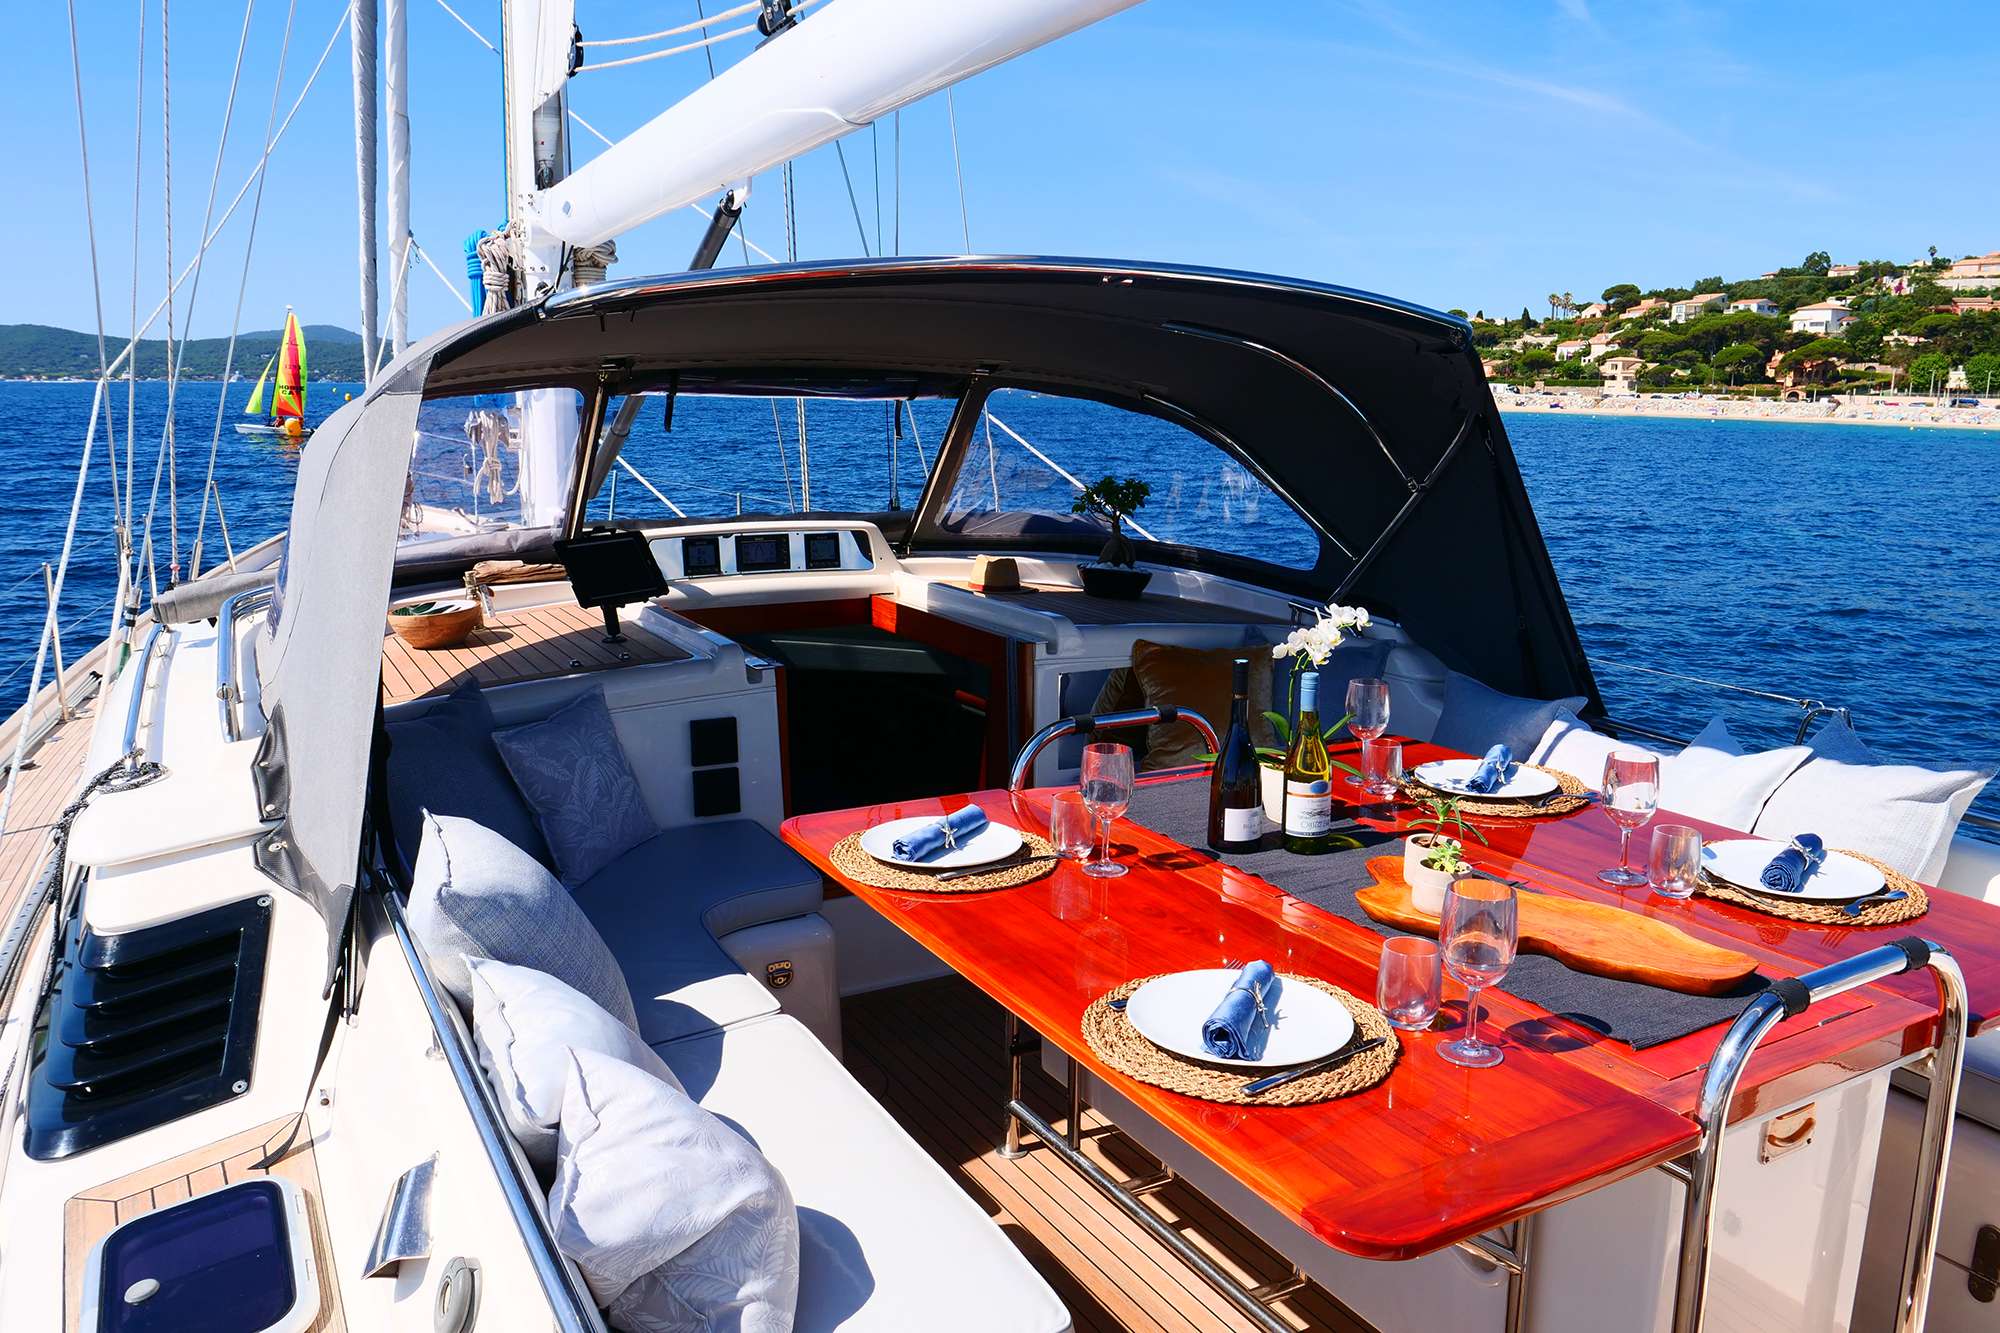 ELVIS MAGIC Yacht Charter - Delightful upper deck dining